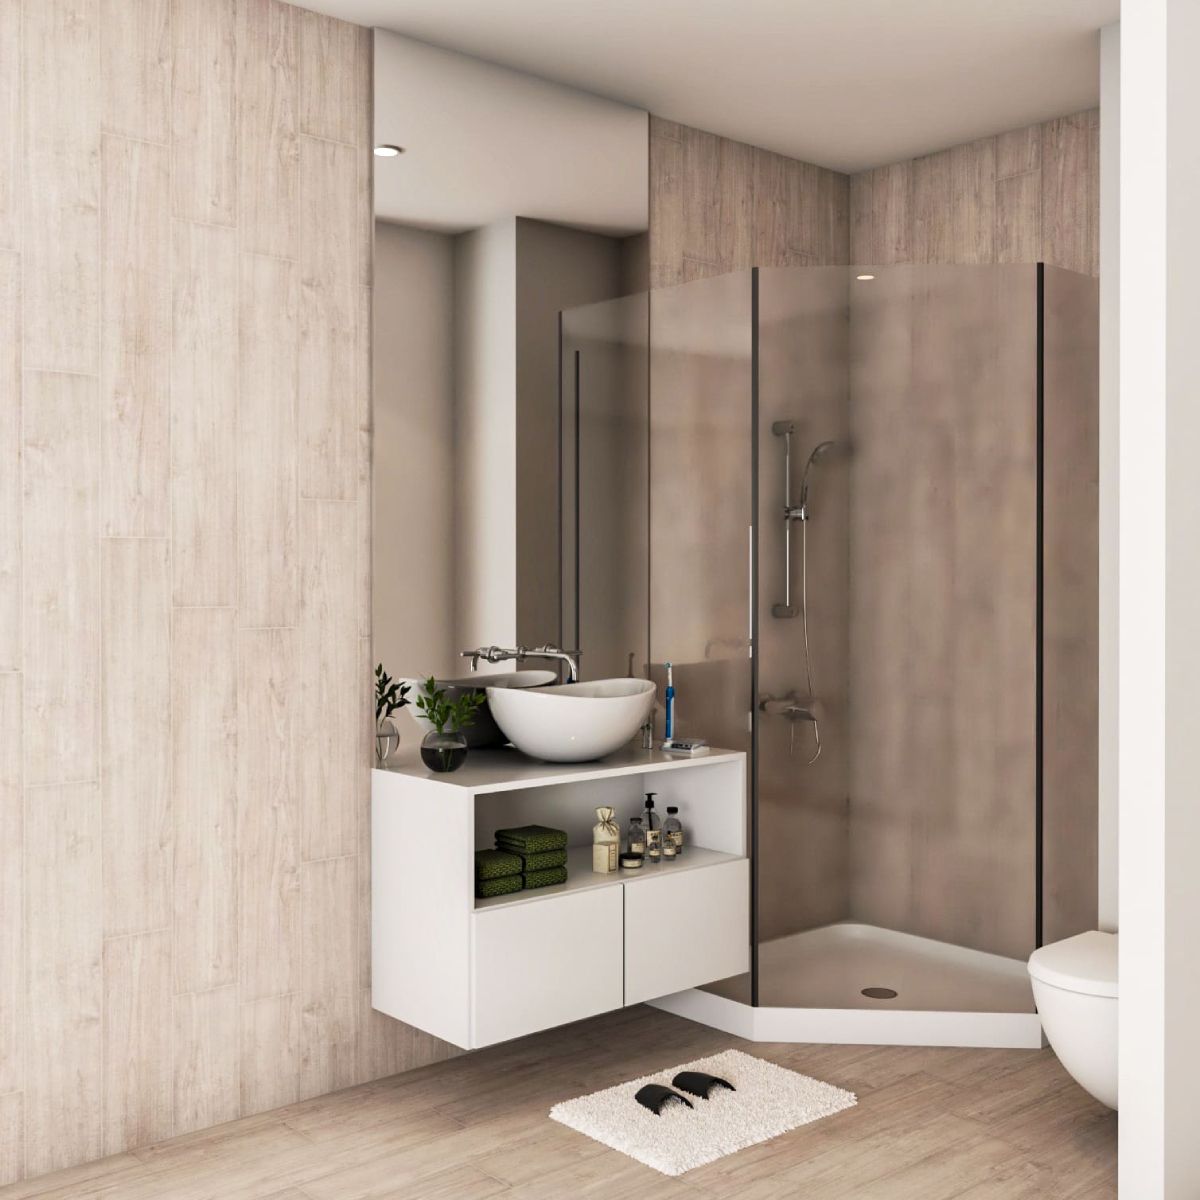 Modern Beige Bathroom Tiles Design With A Matte Finish